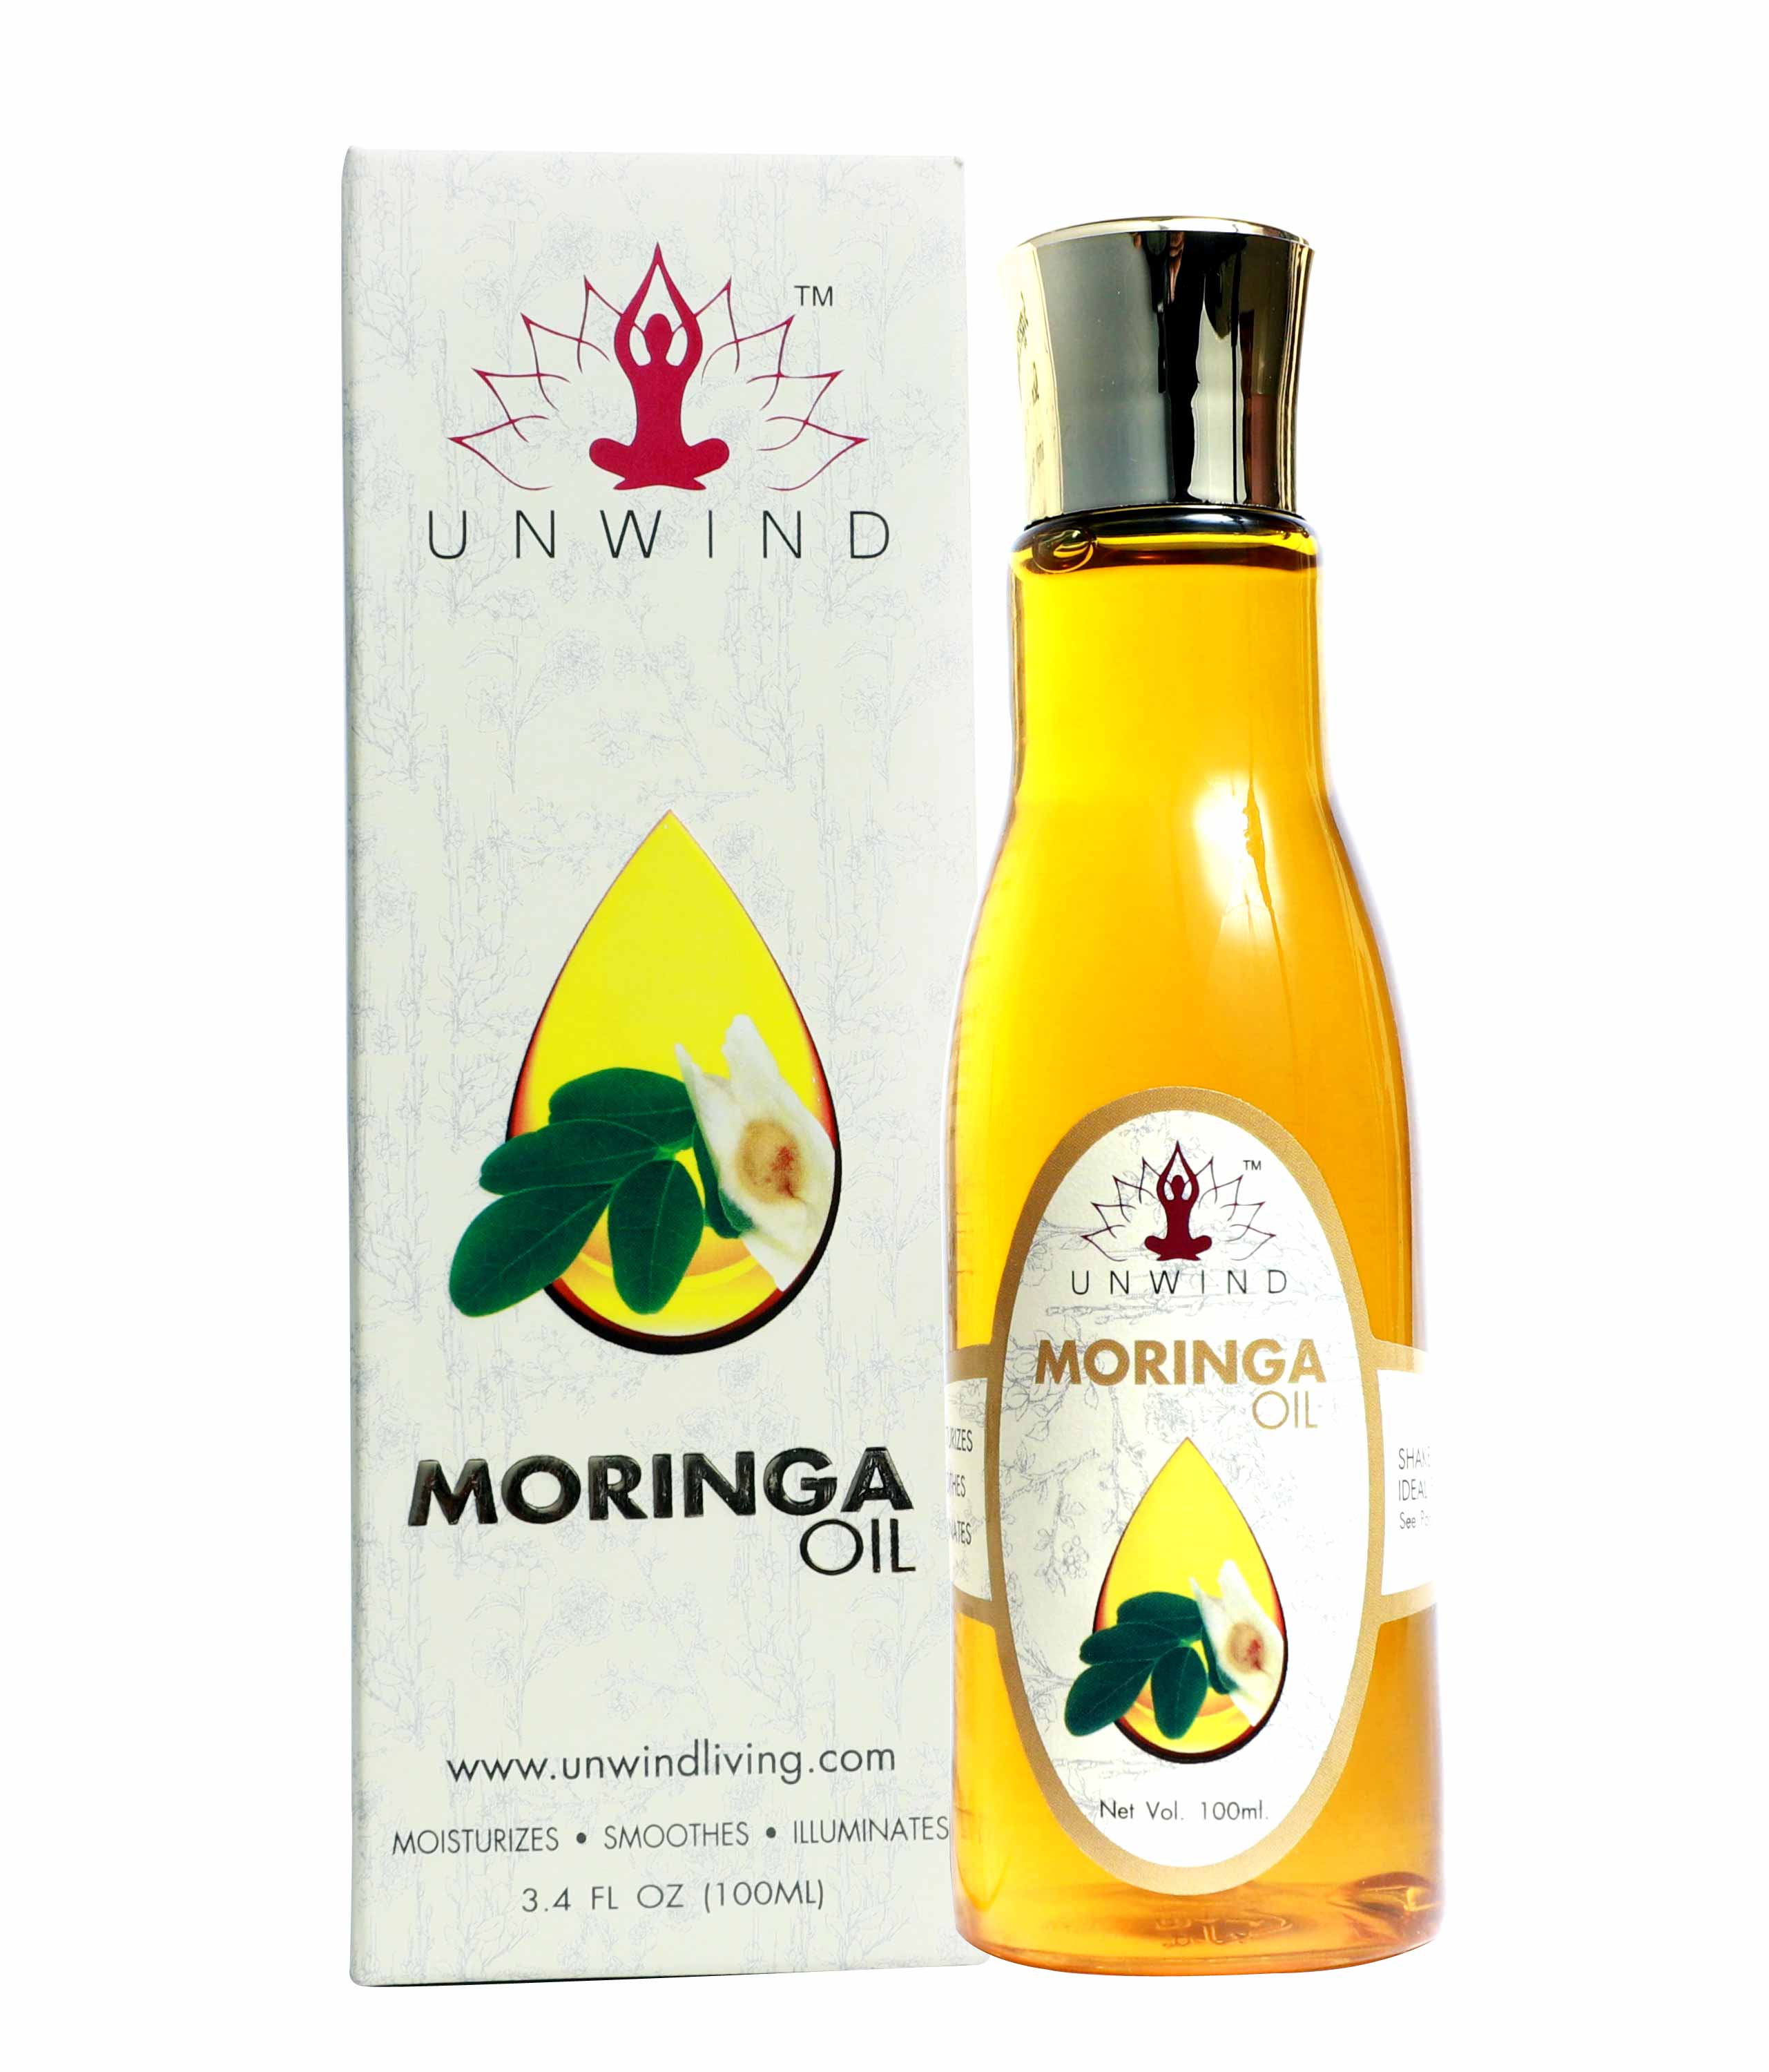 Buy Unwind Moringa Oil at Best Price Online